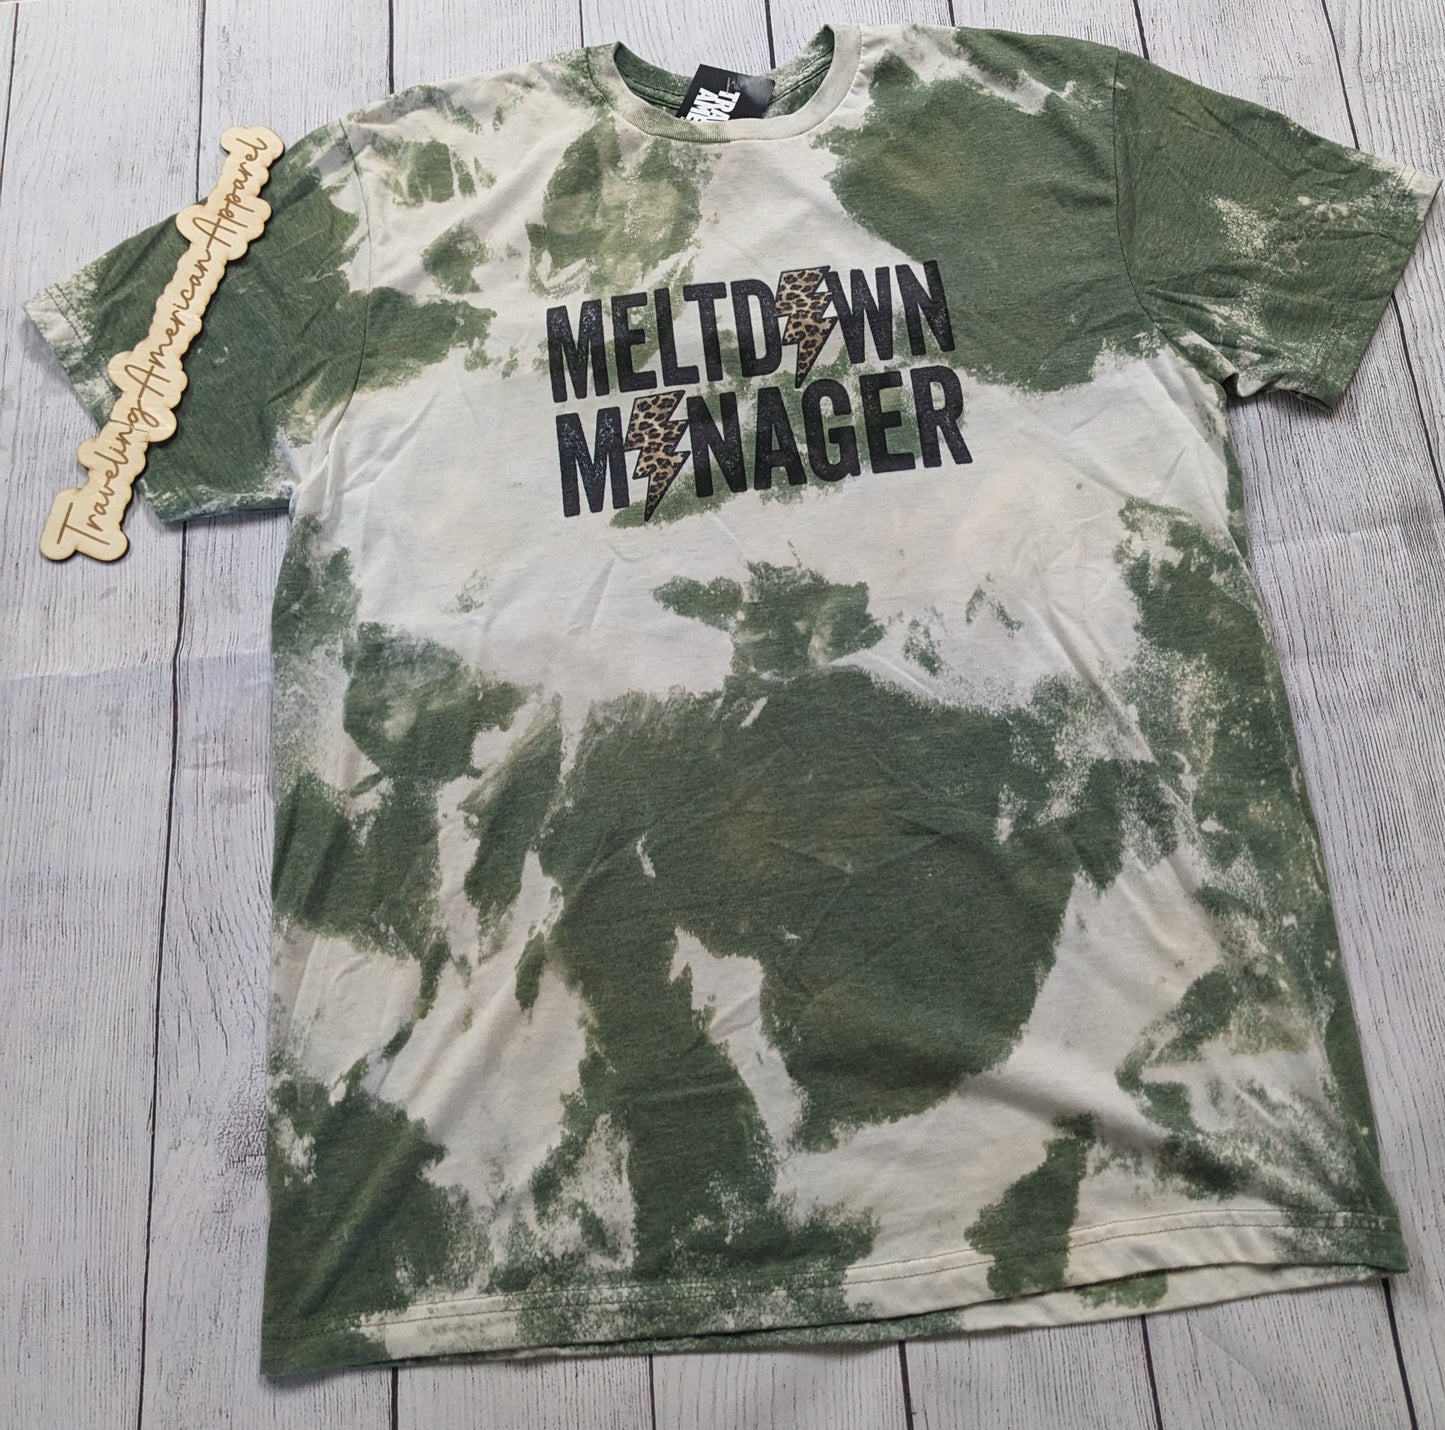 Meltdown Manager T-shirt